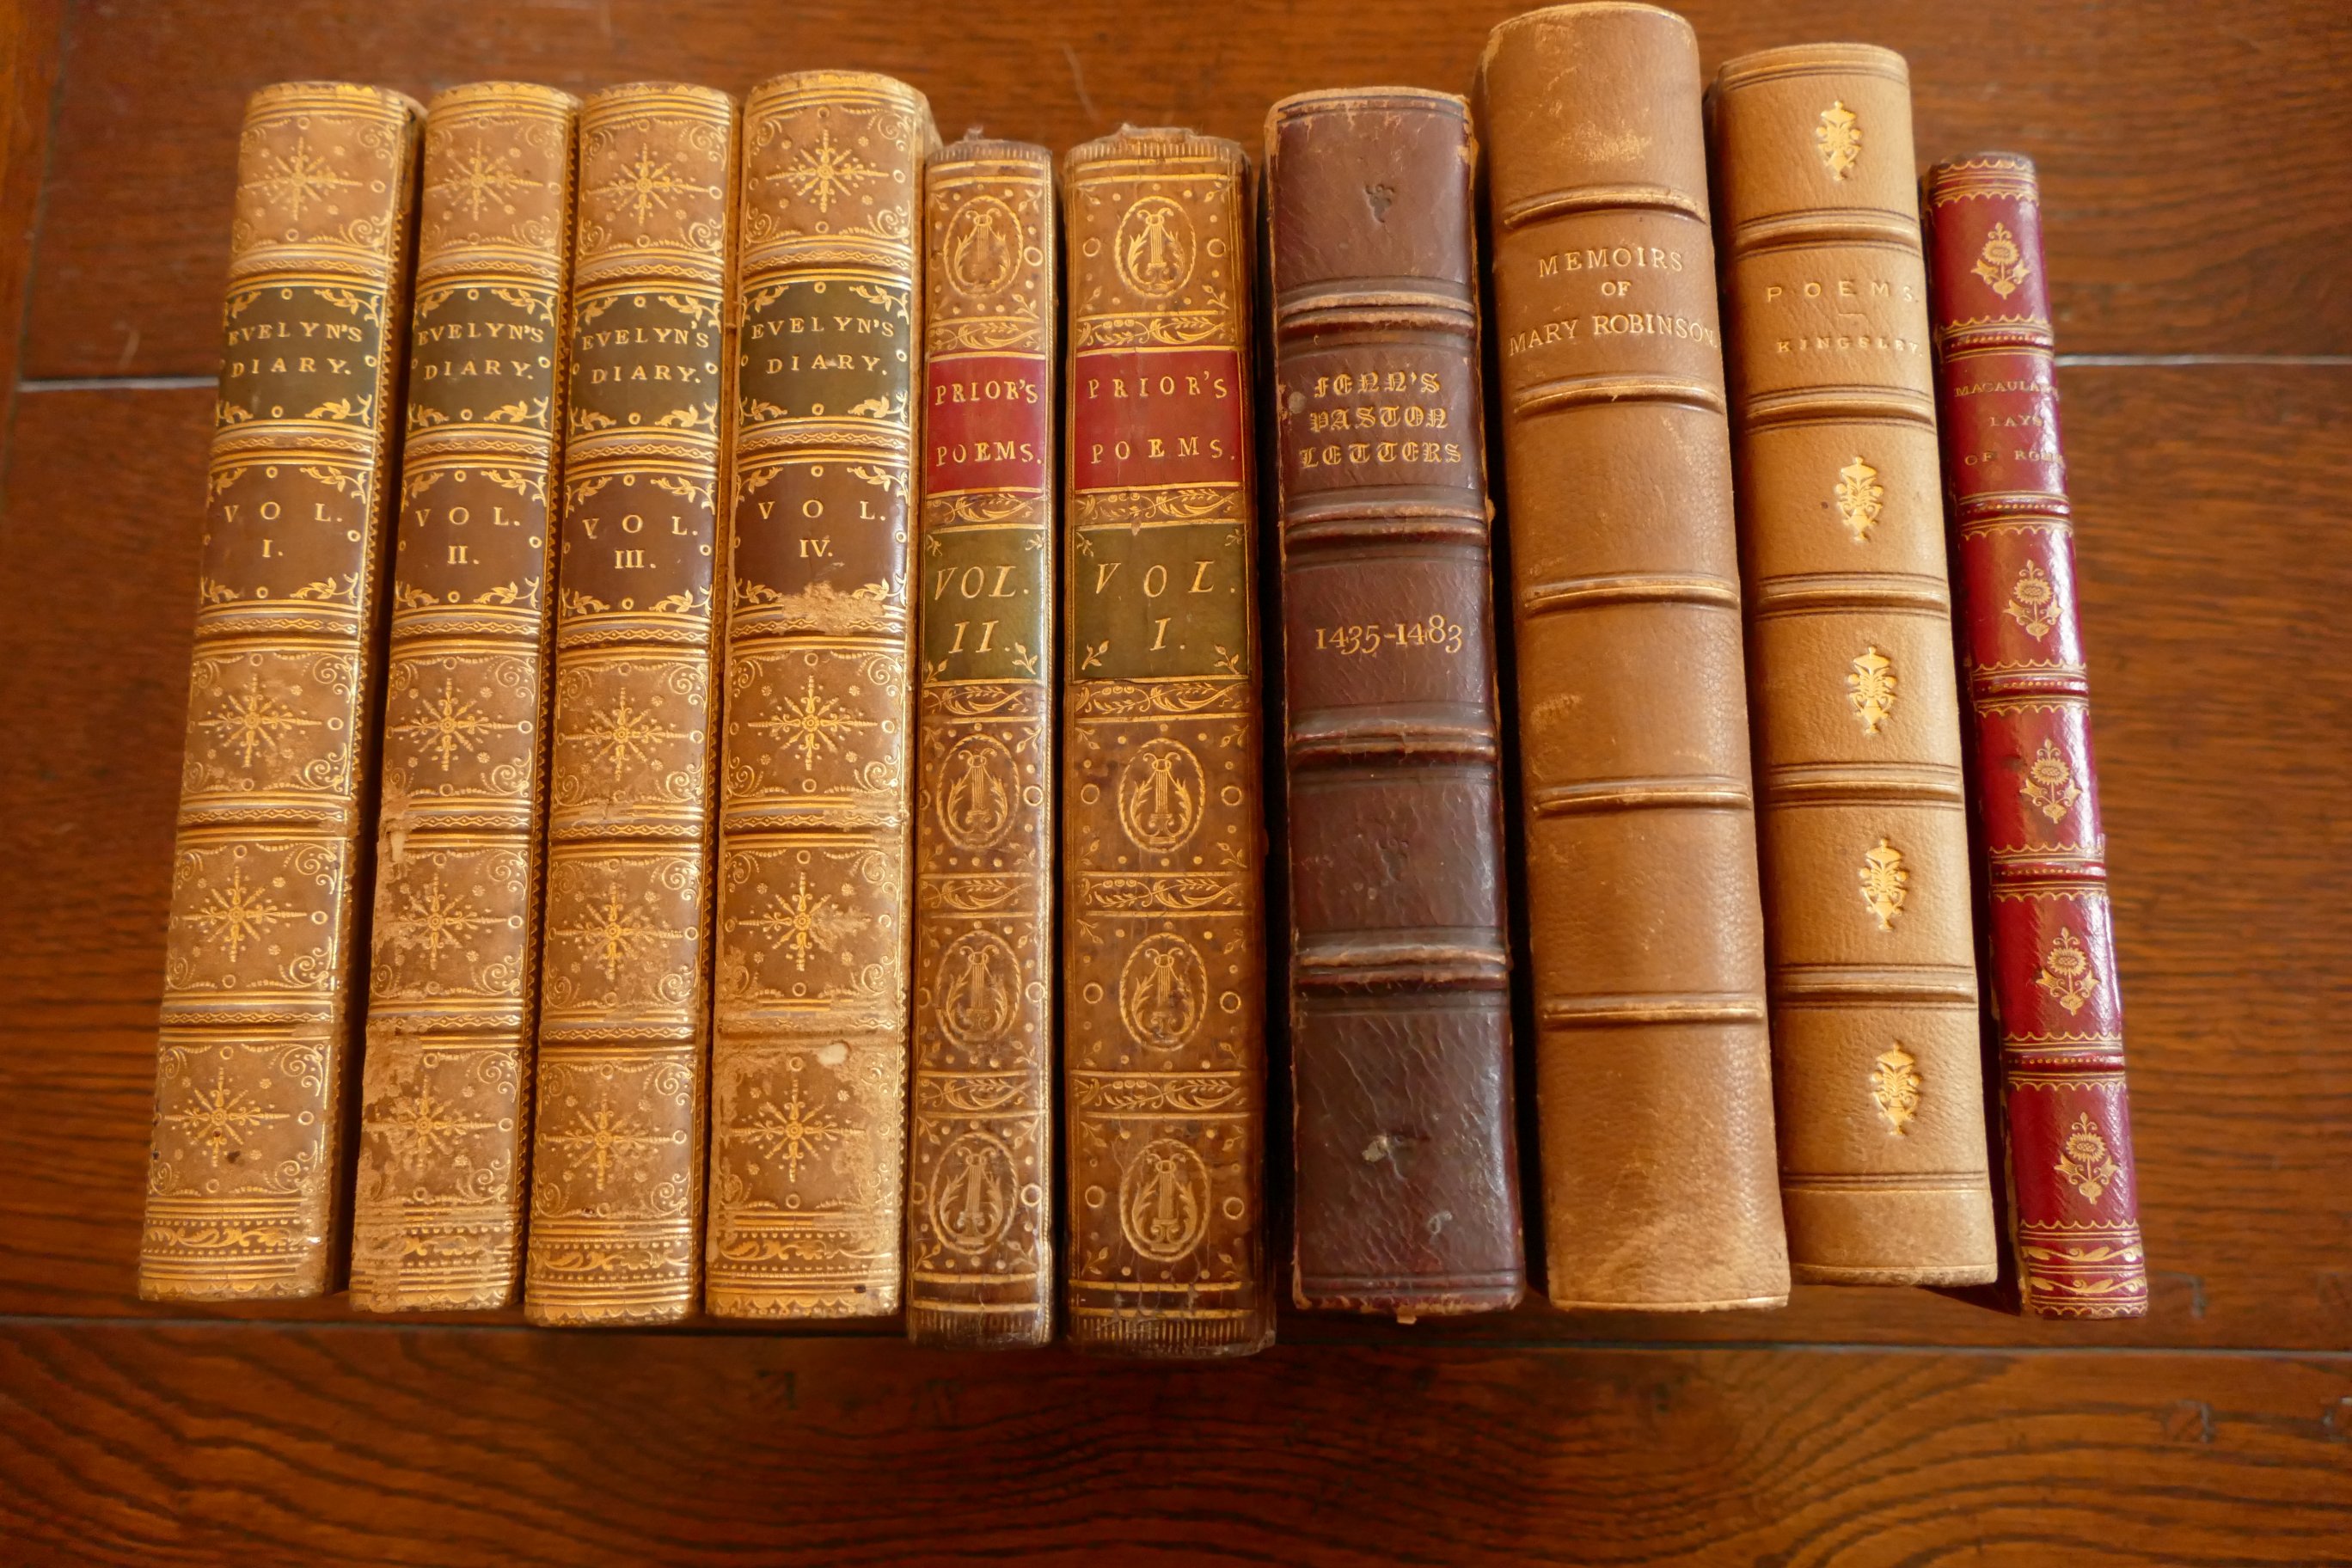 BOX; EVELYN's Diary, 4 vols, 1857; PRIOR's Poems, 2 vols,